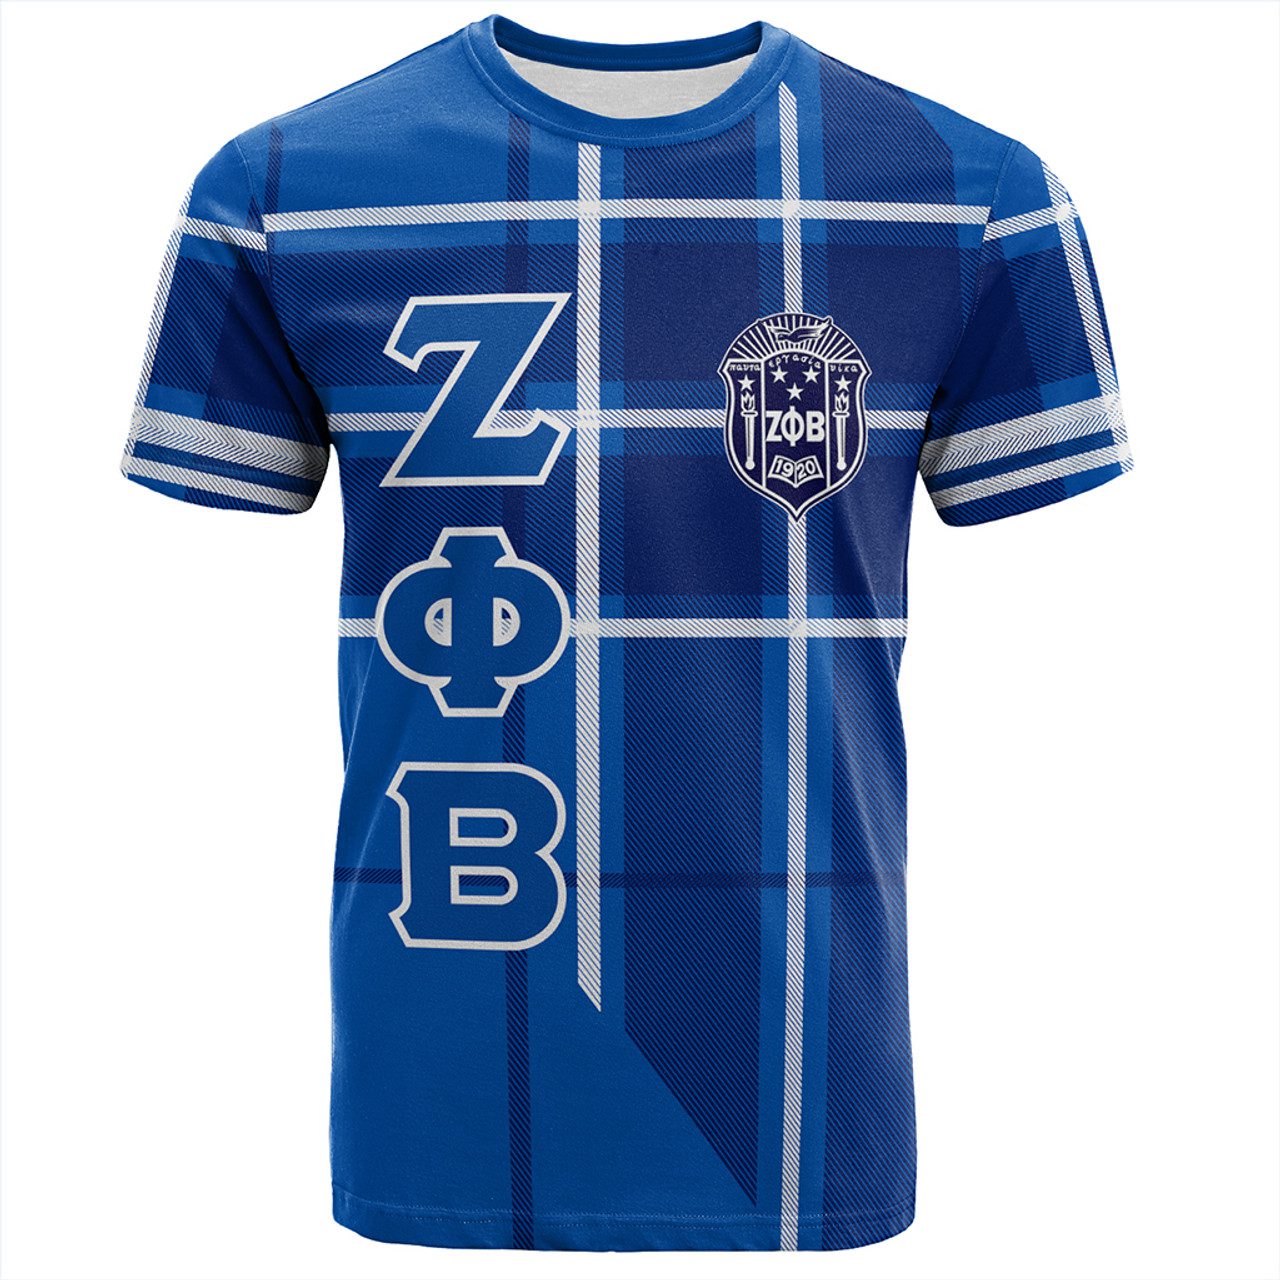 Zeta Phi Beta T-Shirt Burberr Style